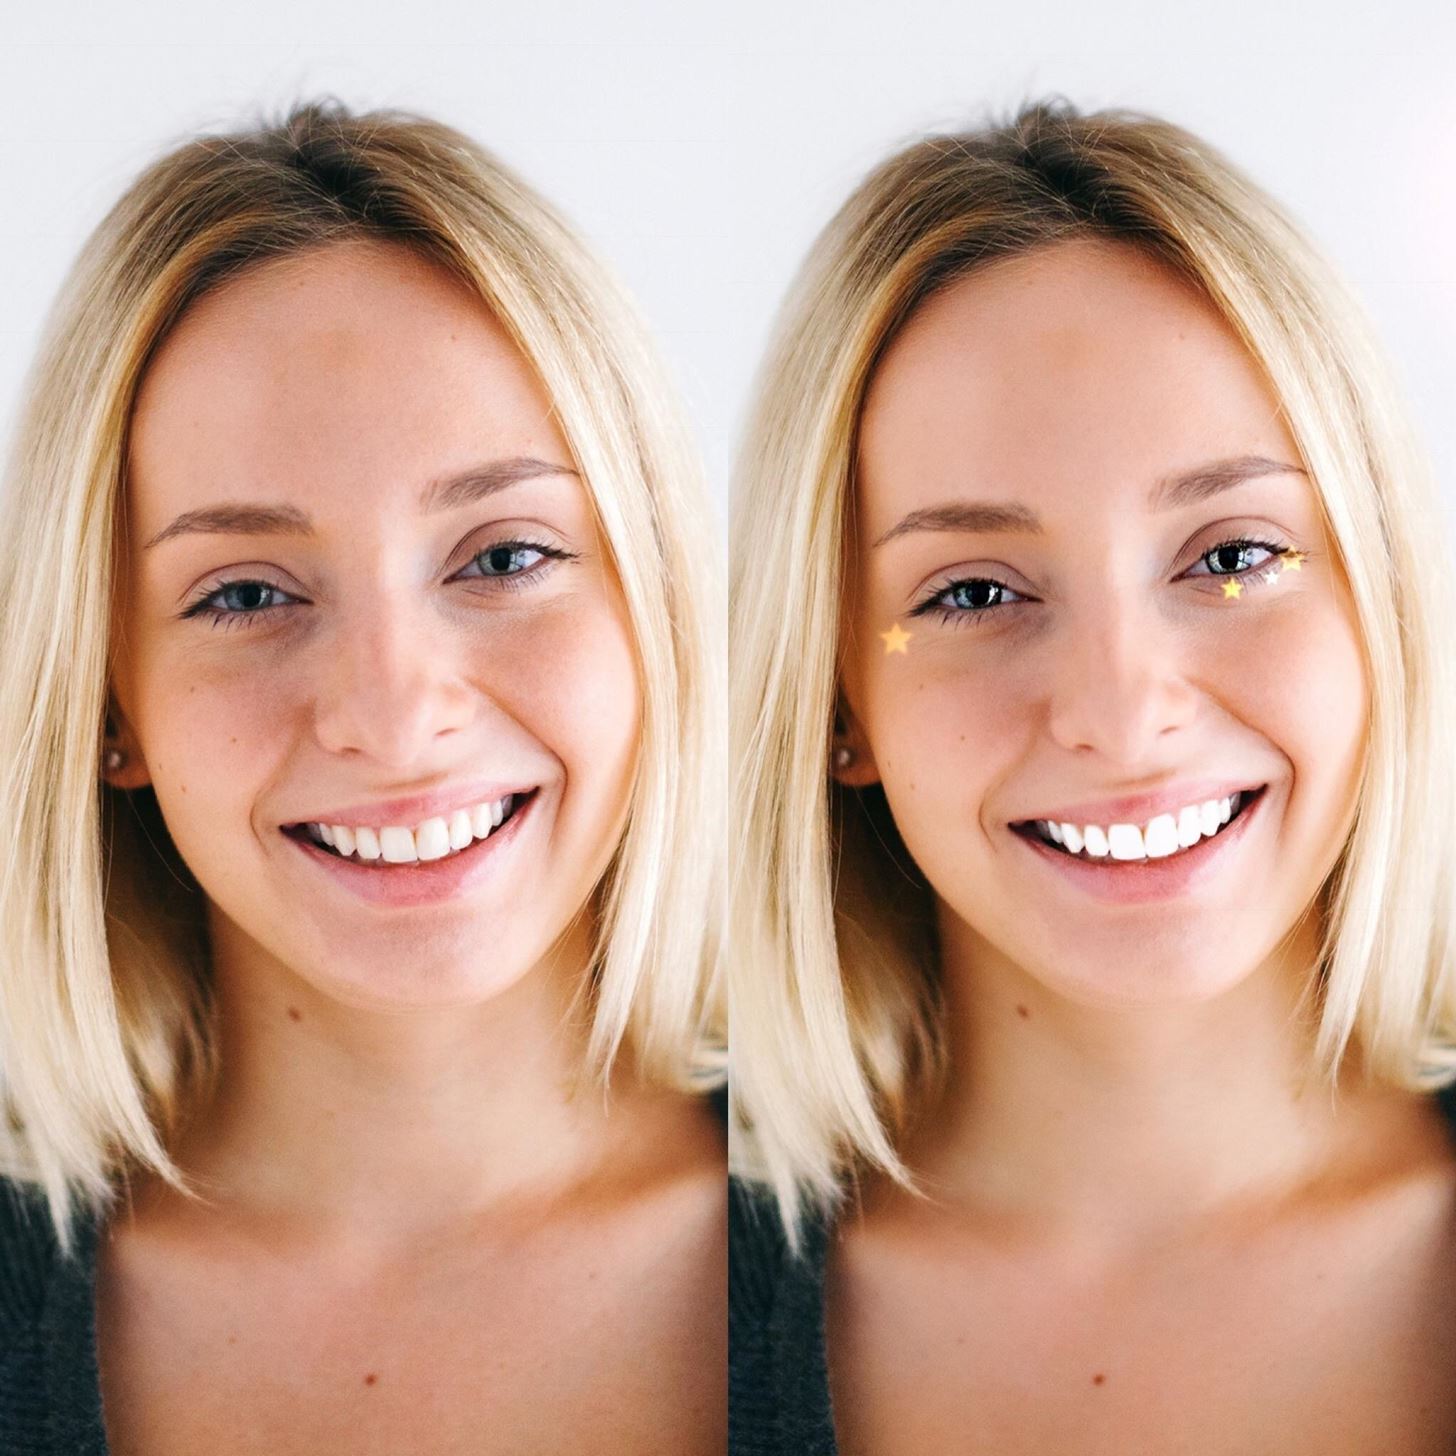 Meitu's BeautyPlus Selfie-Perfecting App Just Got Some Fun AR Filters